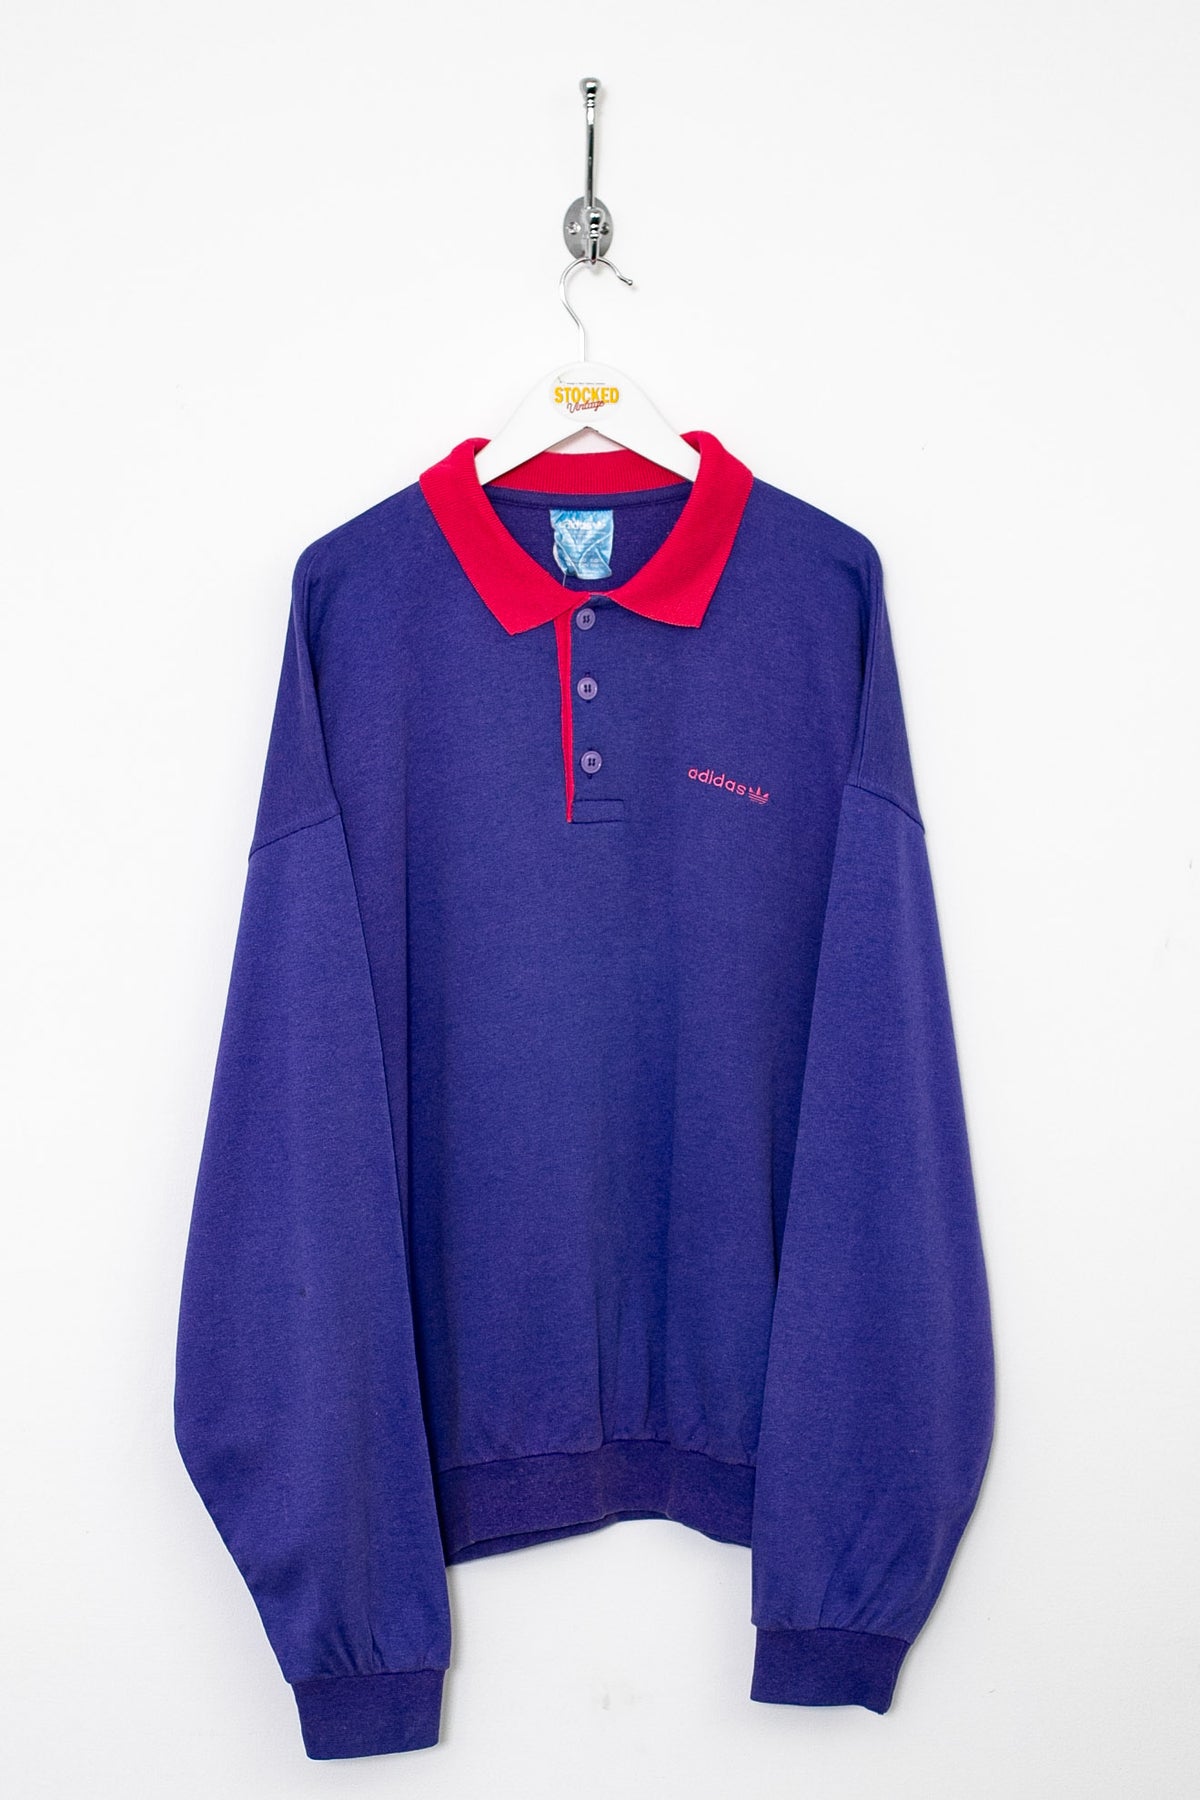 80s Adidas Sweatshirt (L)